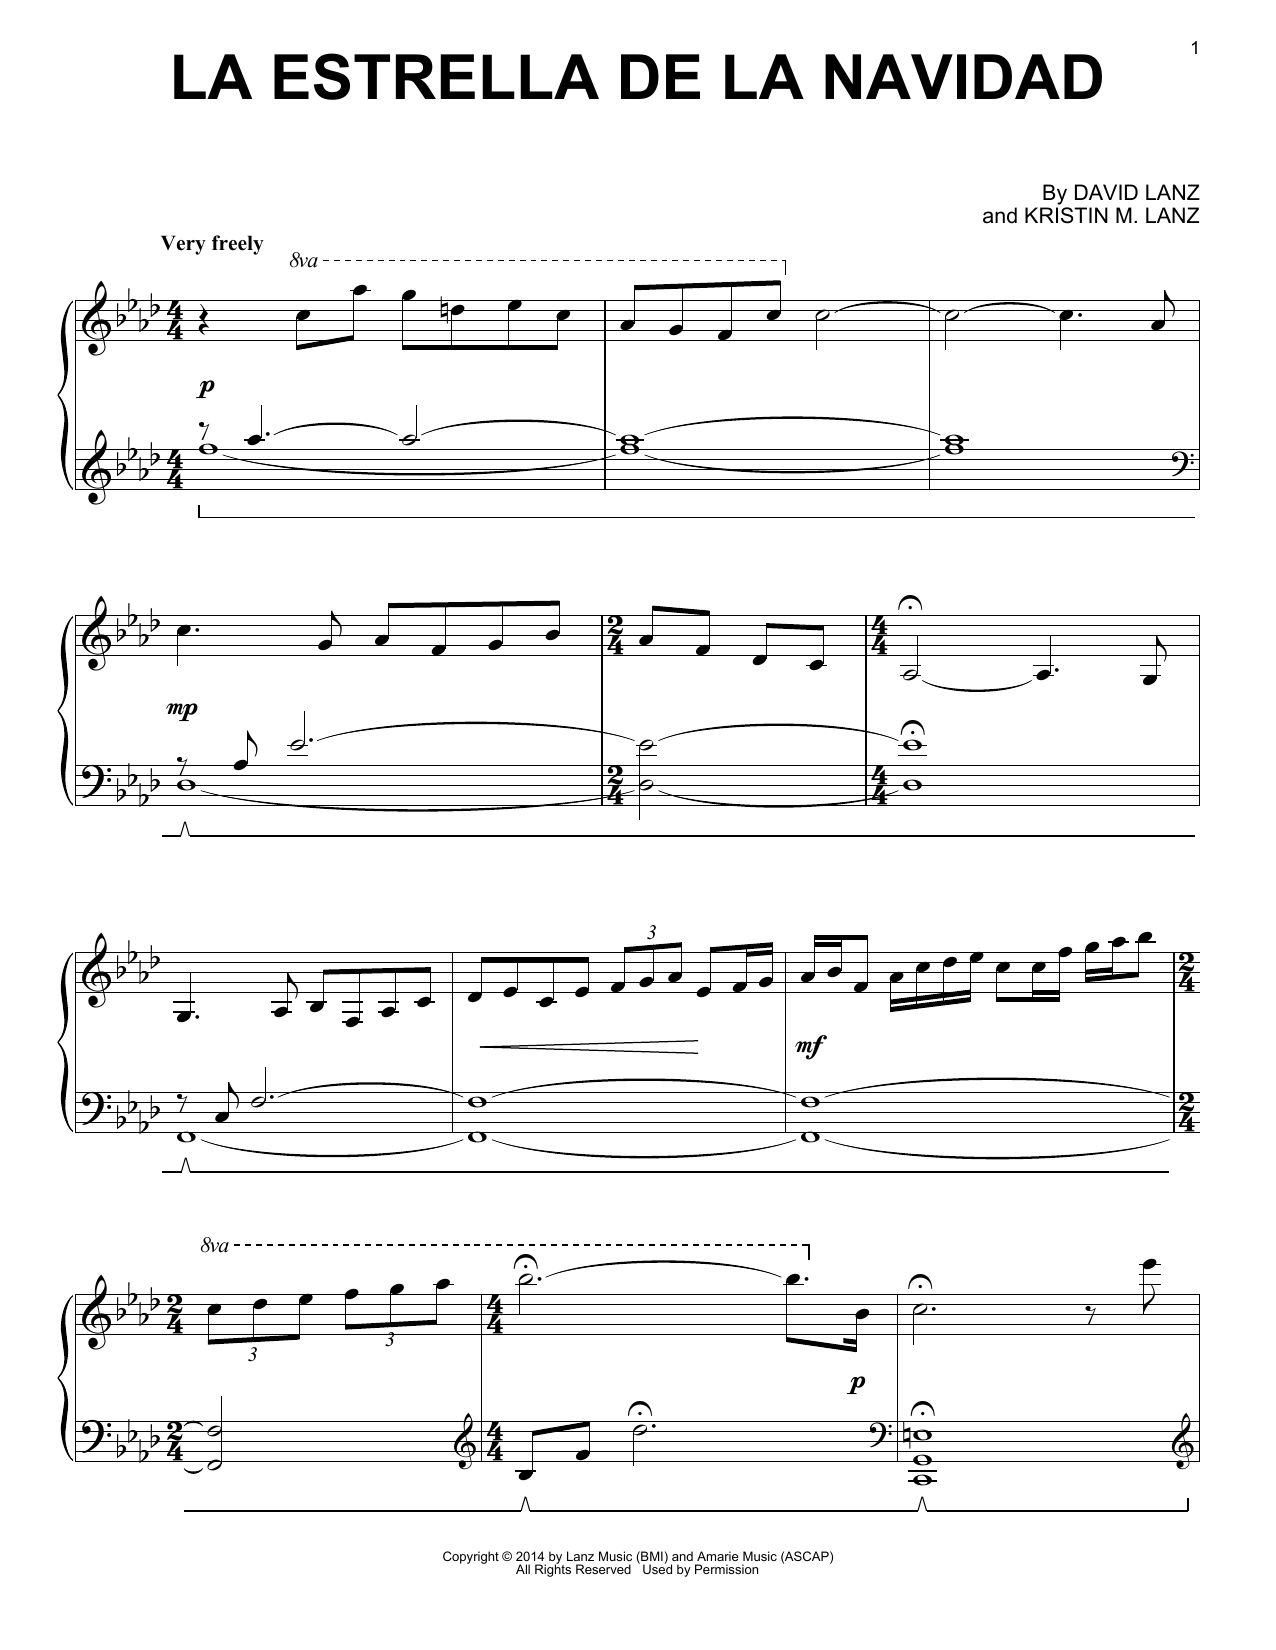 Download David Lanz & Kristin Amarie La Estrella De La Navidad Sheet Music and learn how to play Piano Solo PDF digital score in minutes